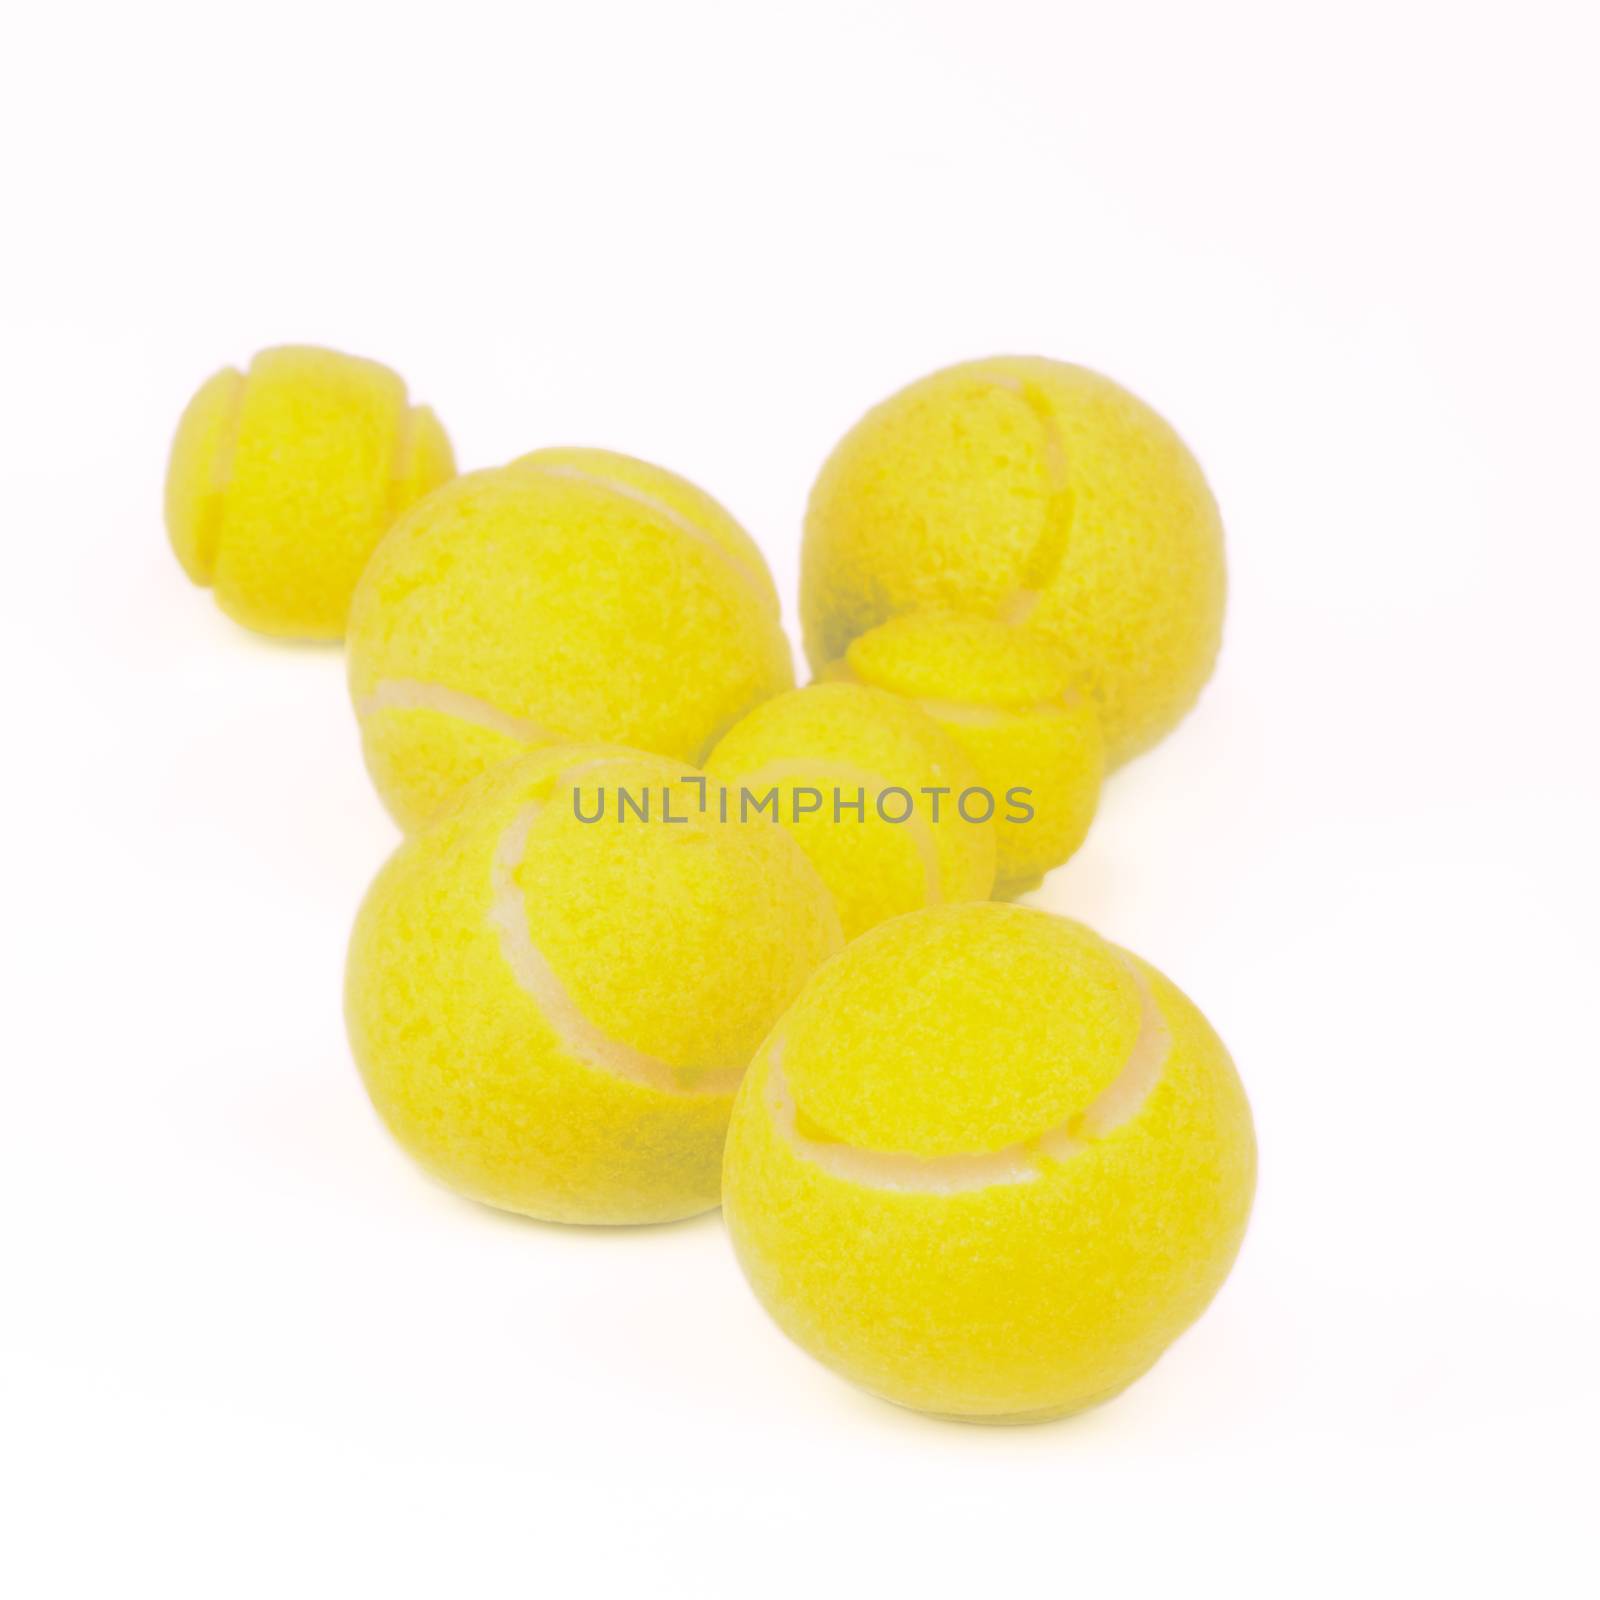 Tennis Balls by zhekos